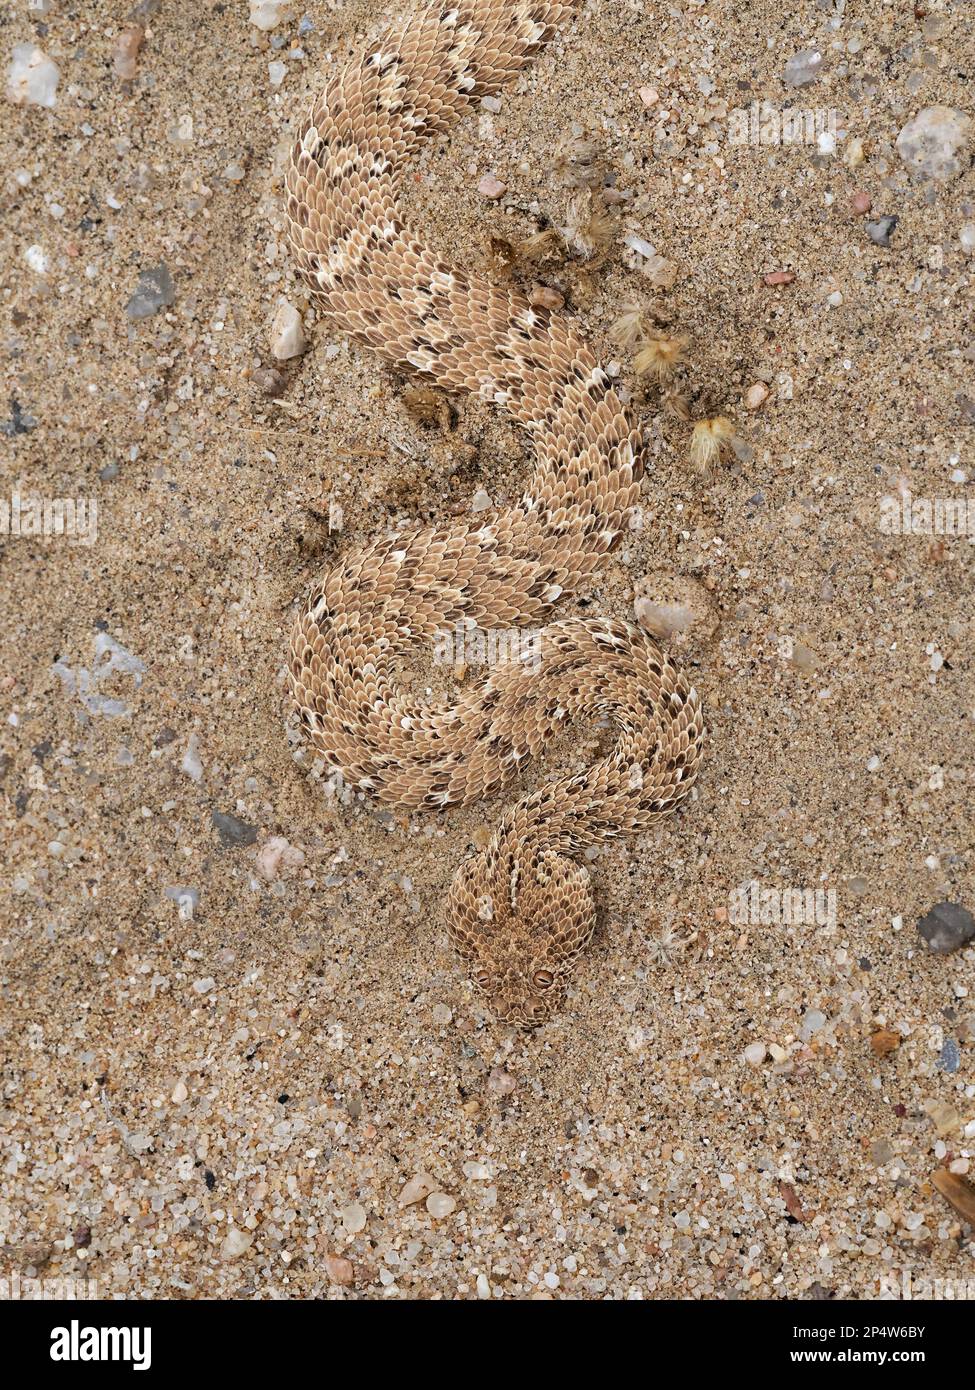 Peringuey’s Adder ( Bitis peringueyi) resting on sand, Swakopmund, Namibia, January Stock Photo